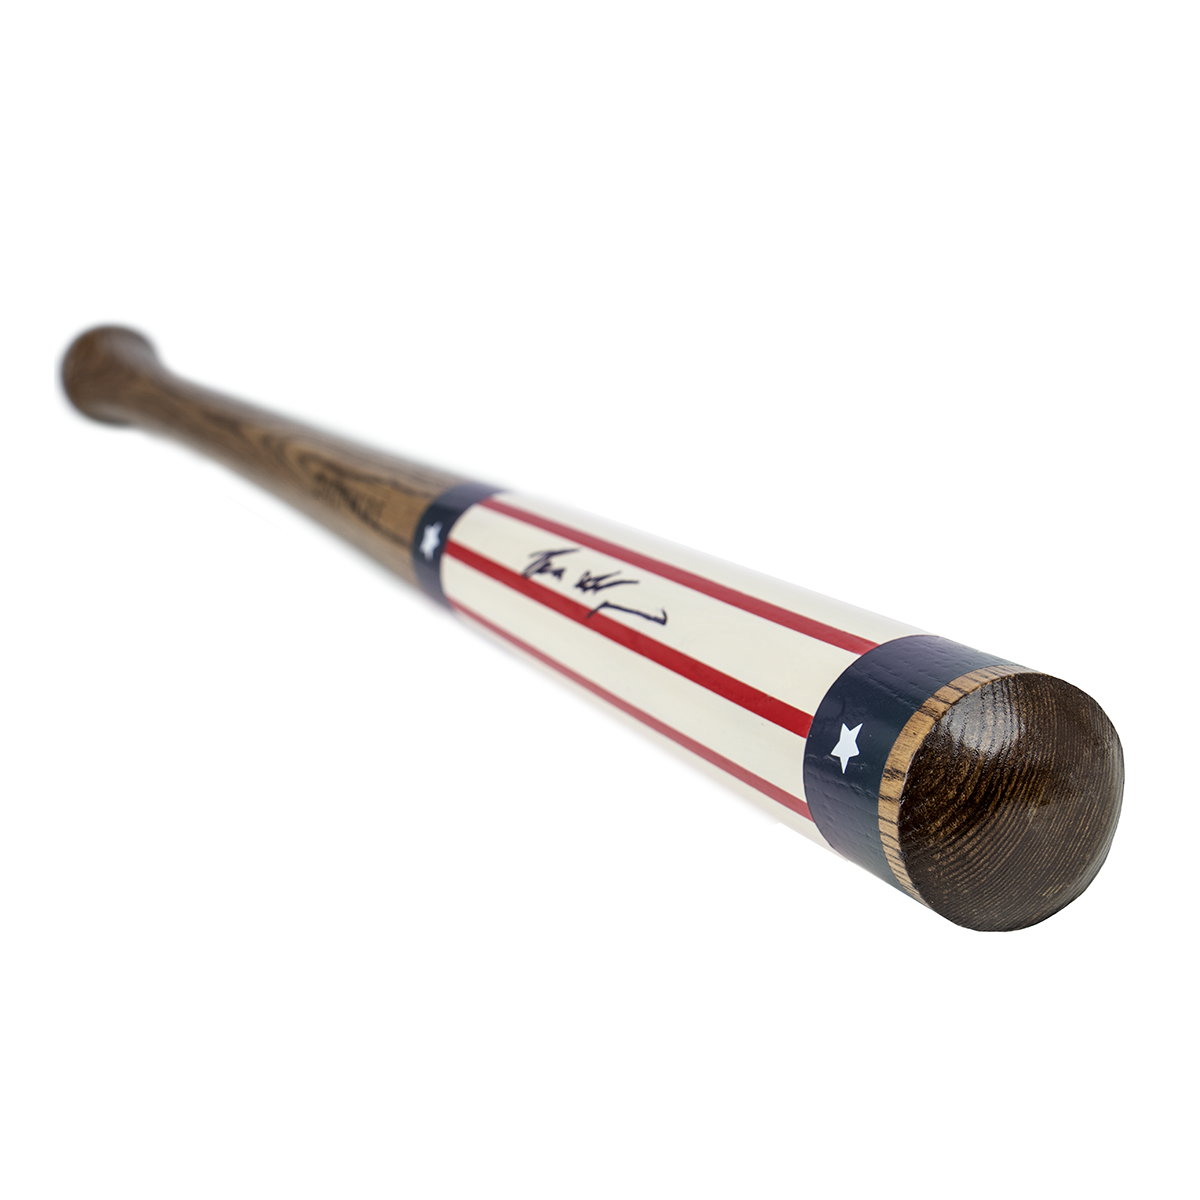 Ben Shapiro Autographed "Old Glory" Baseball Bat